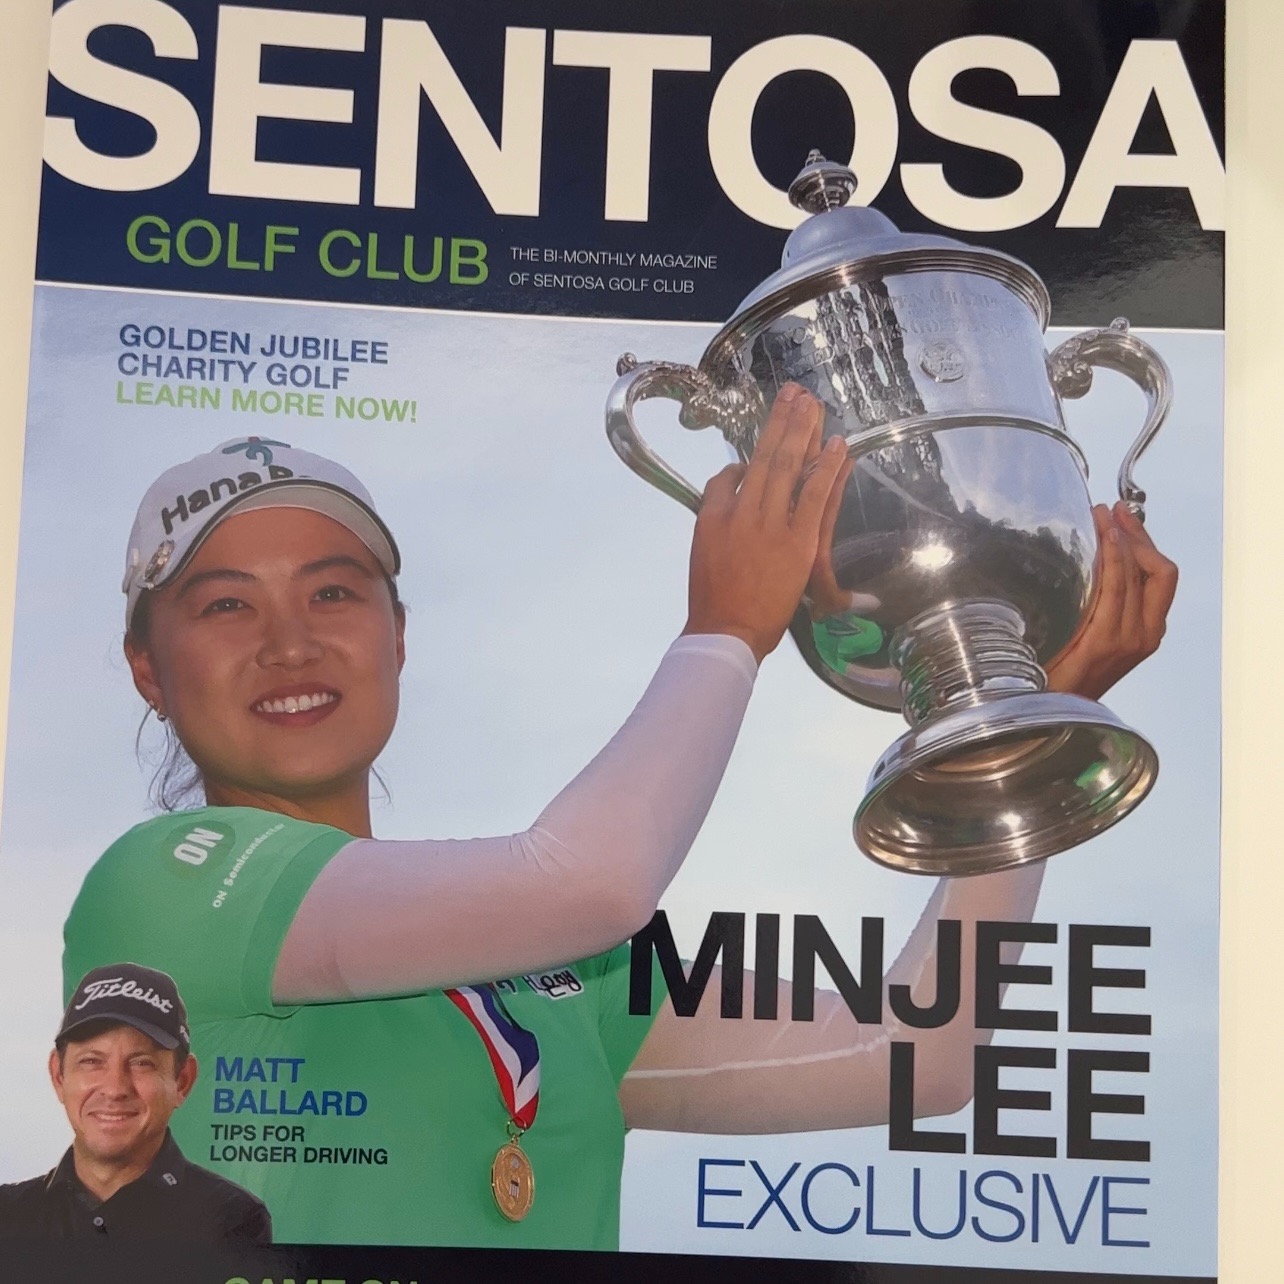 Pop-up at Sentosa golf club